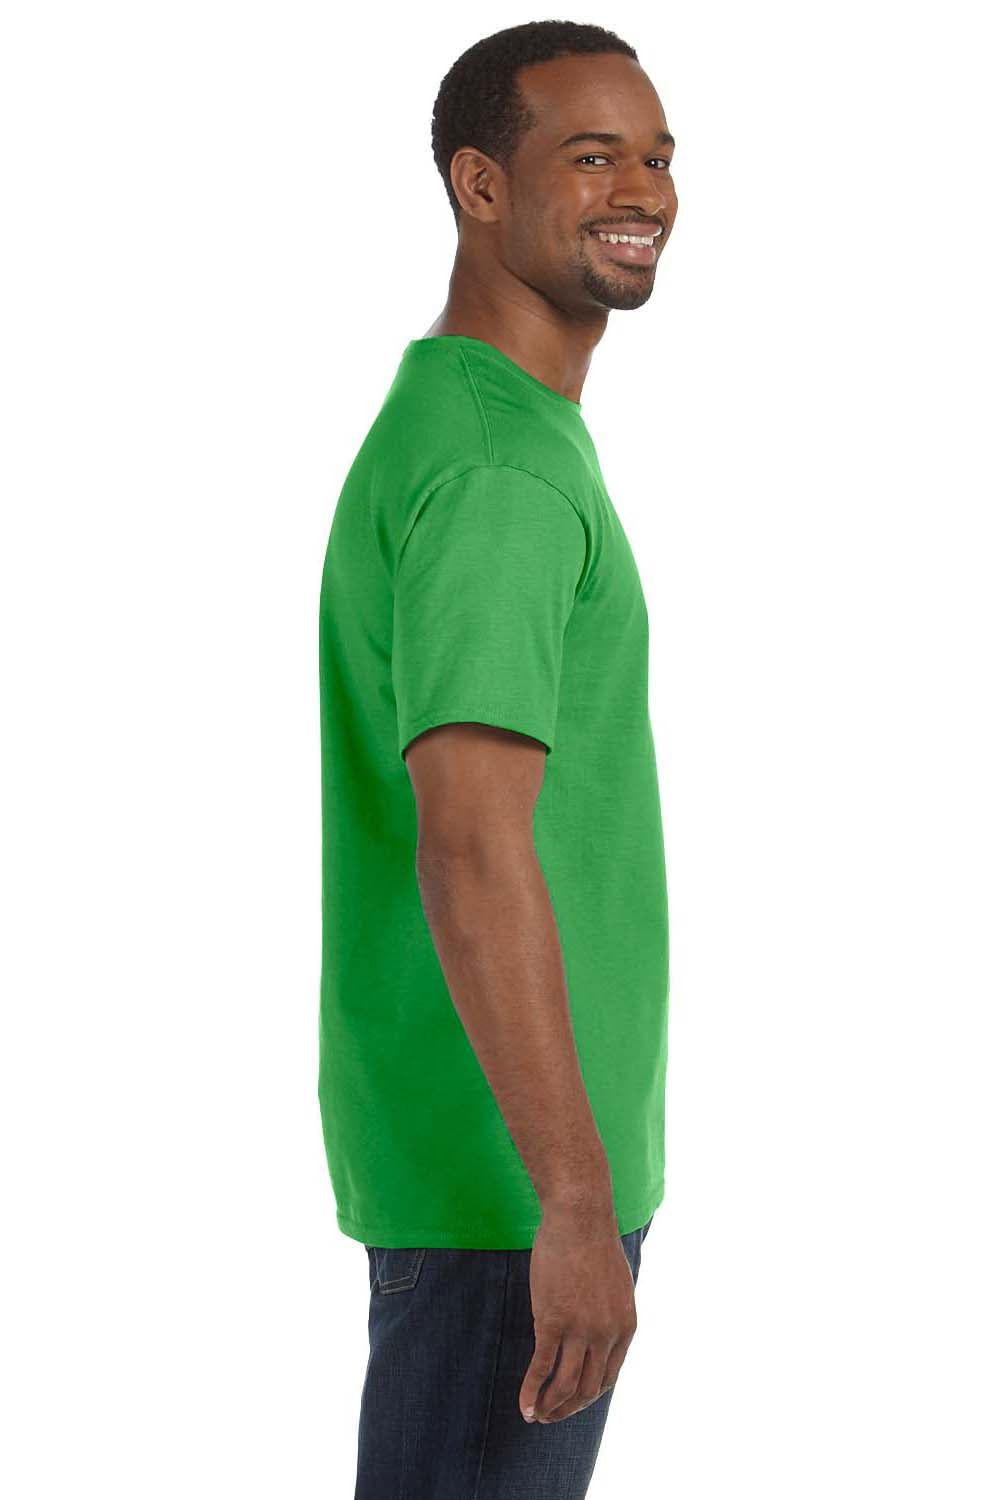 Hanes 5250T Mens ComfortSoft Short Sleeve Crewneck T-Shirt Shamrock Green Side